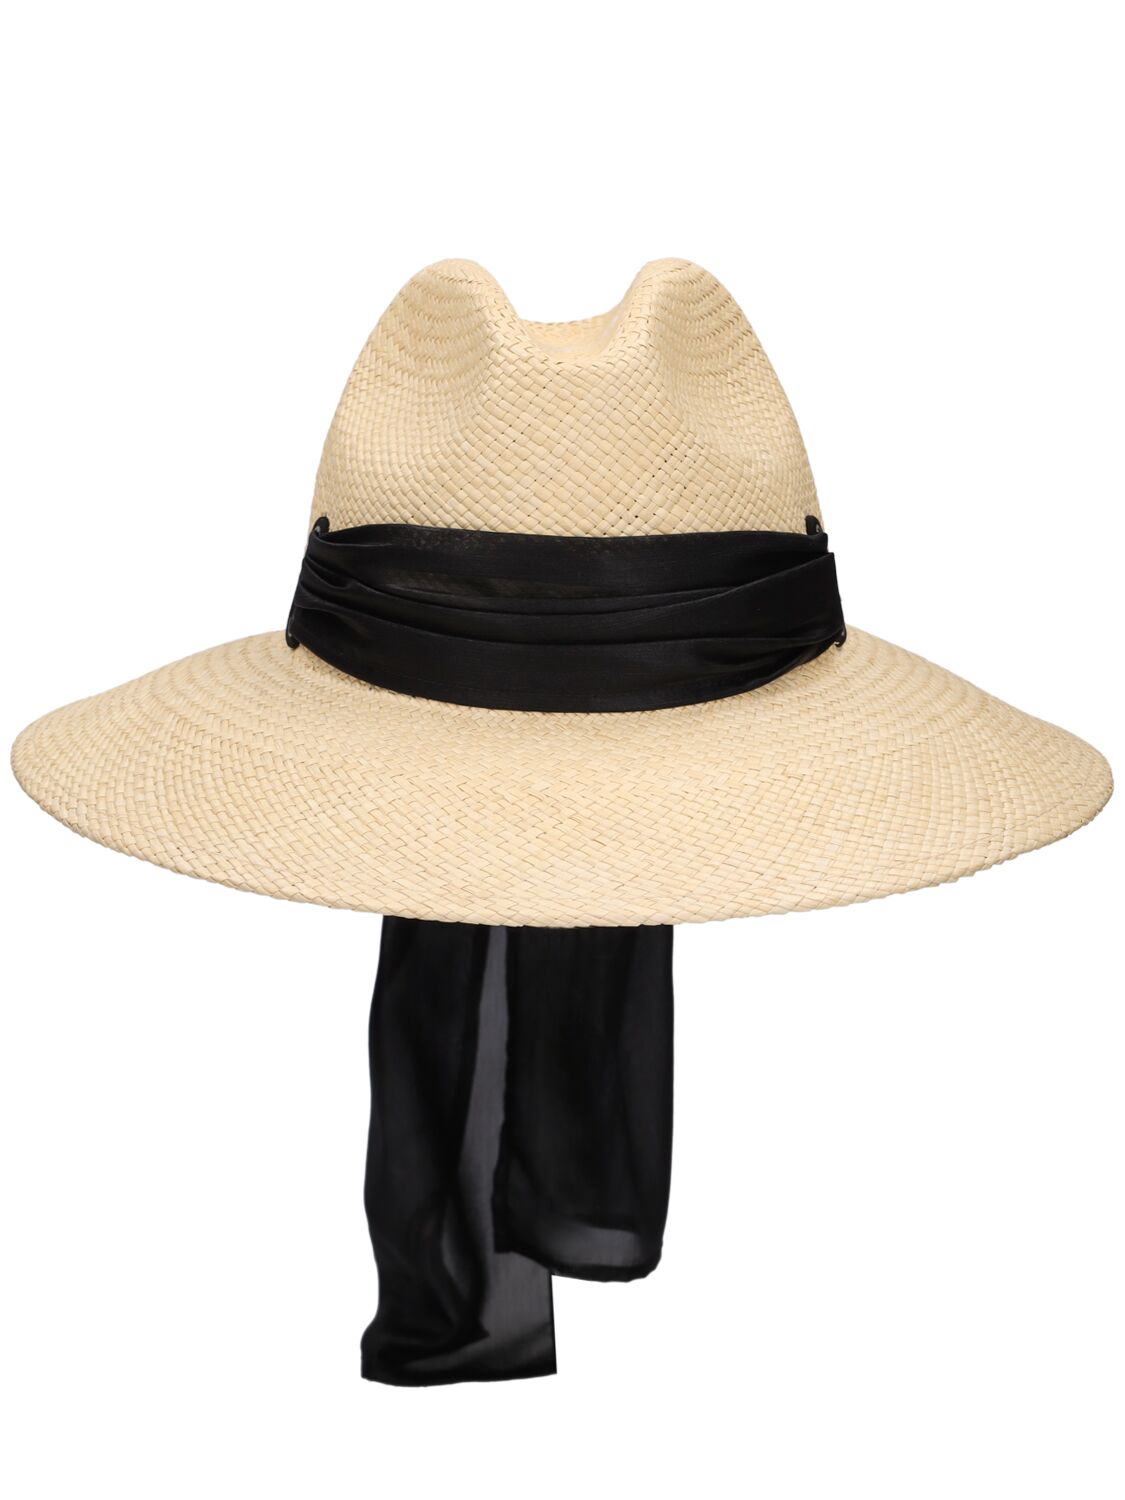 Image of Samantha Straw Panama Hat